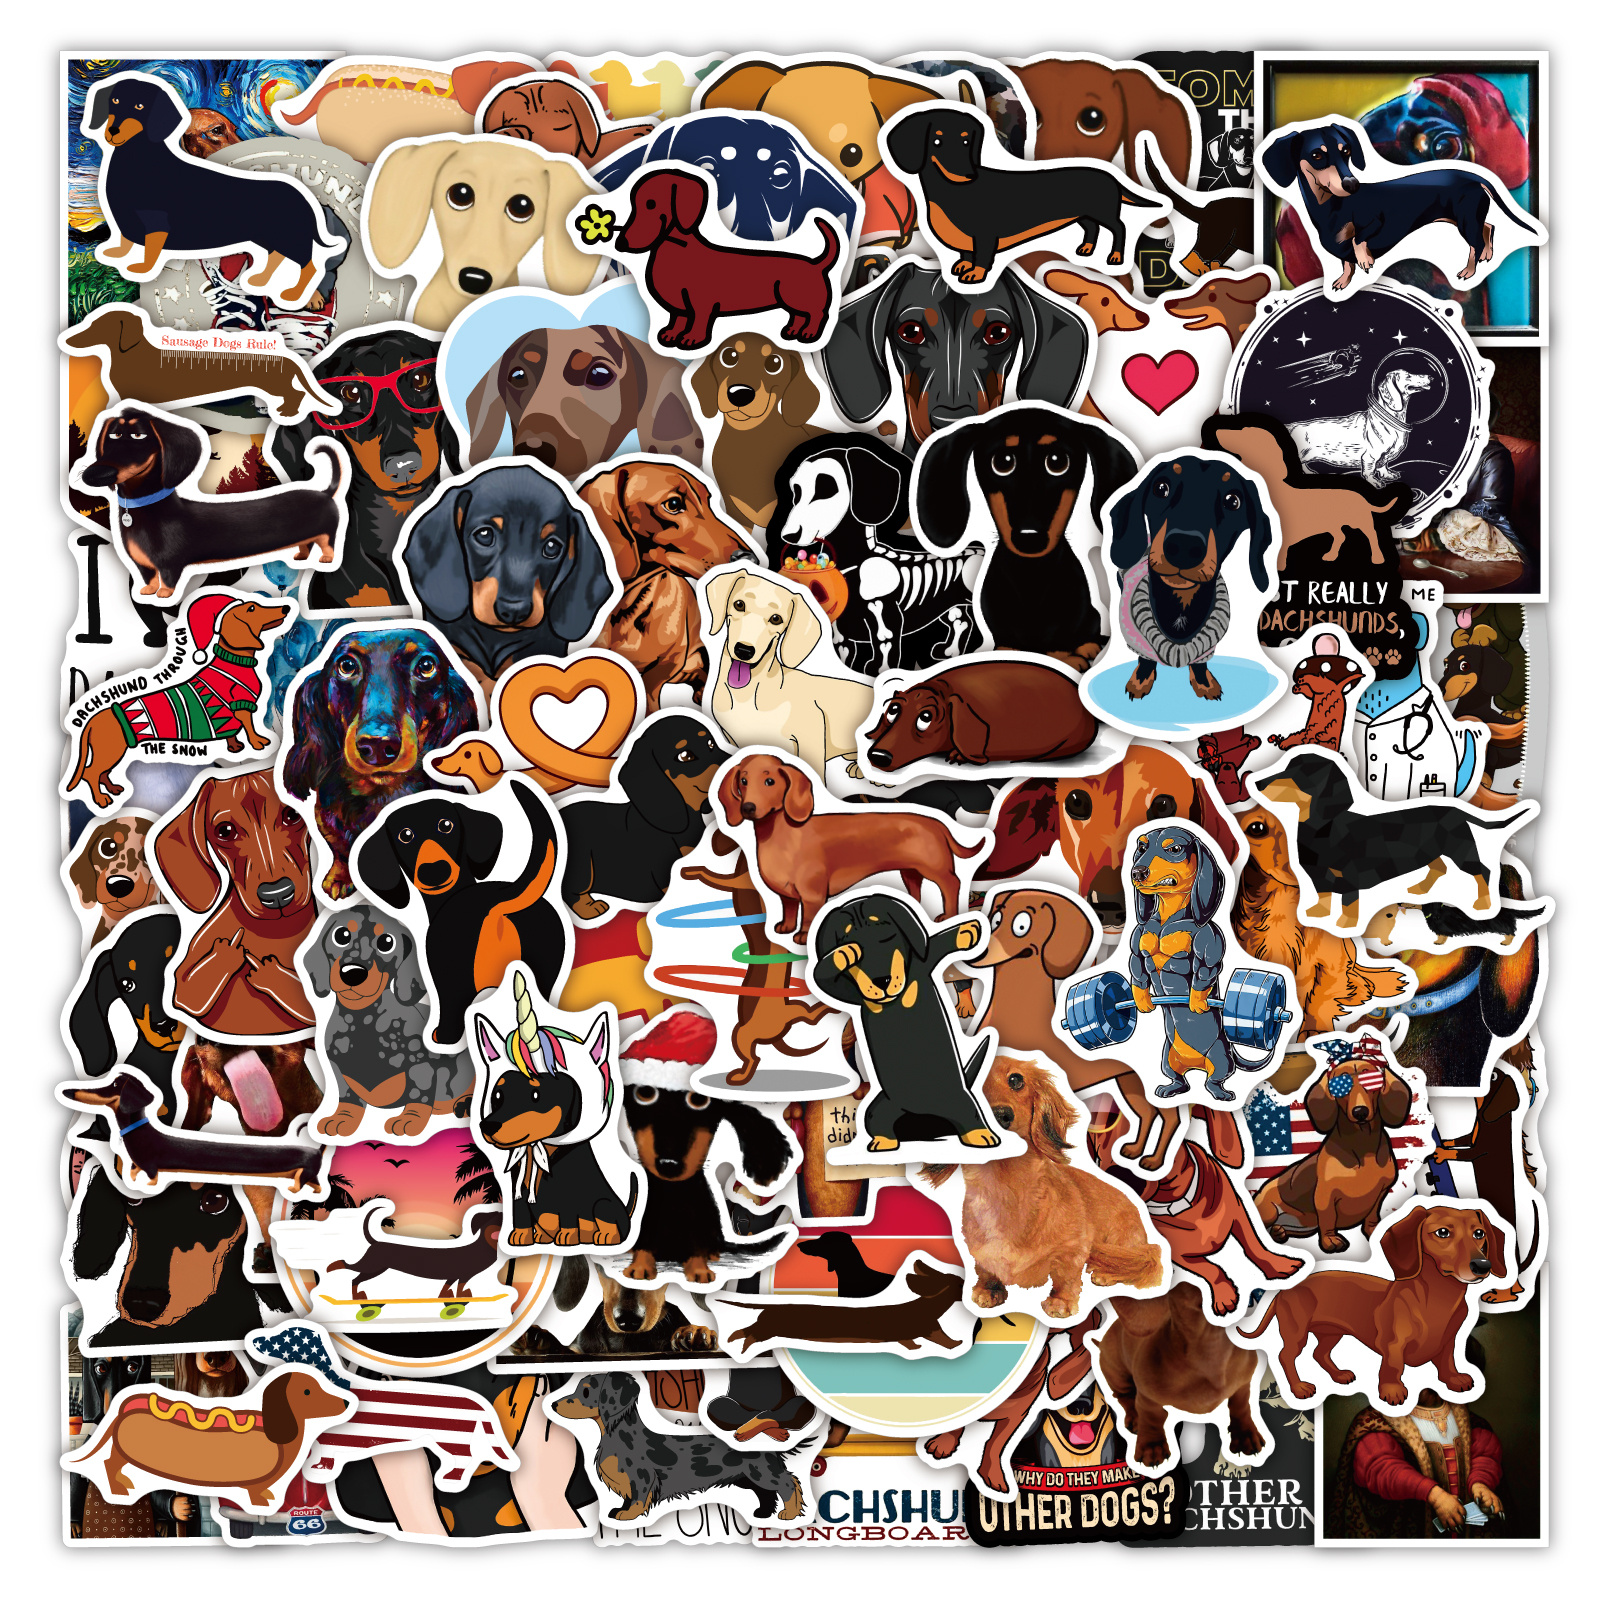 Dachshund Dog Cartoon Sticker Decals: Cute and Waterproof for Kids